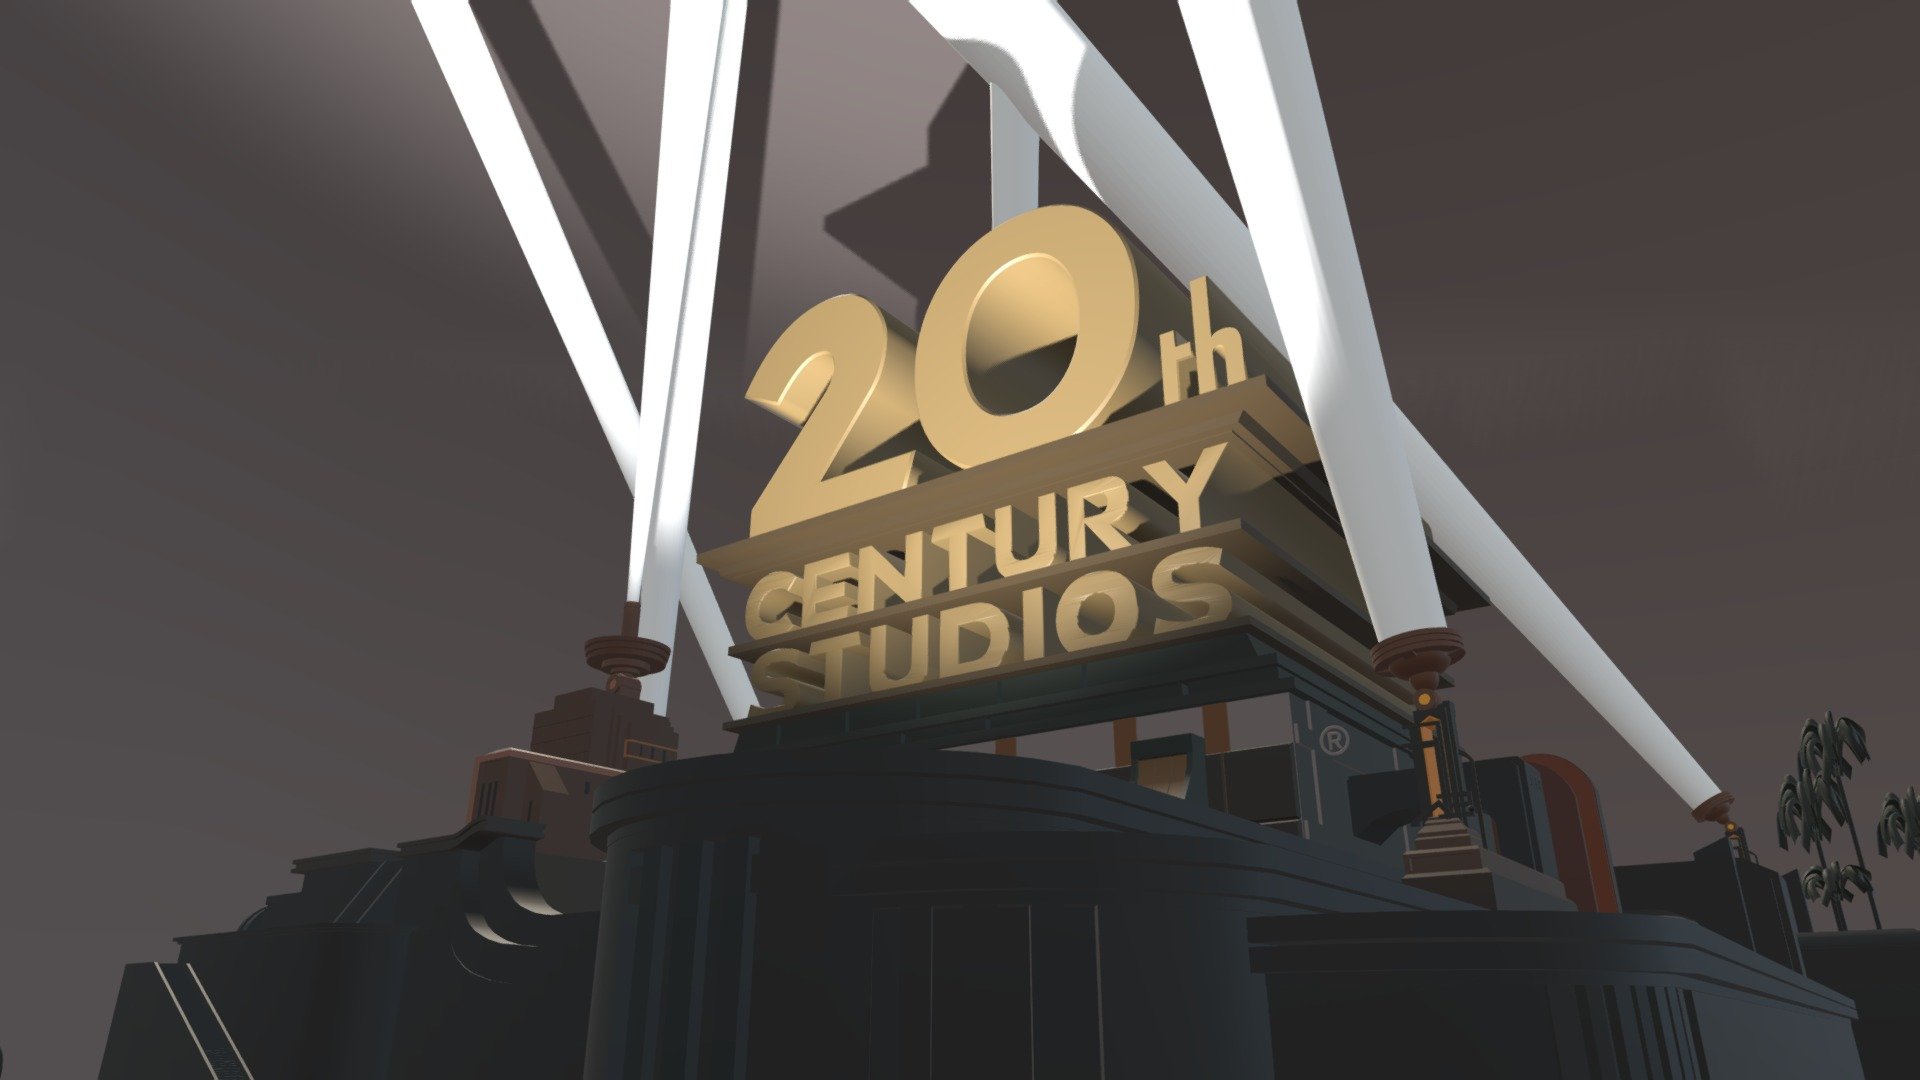 20th century studios 2020 logo